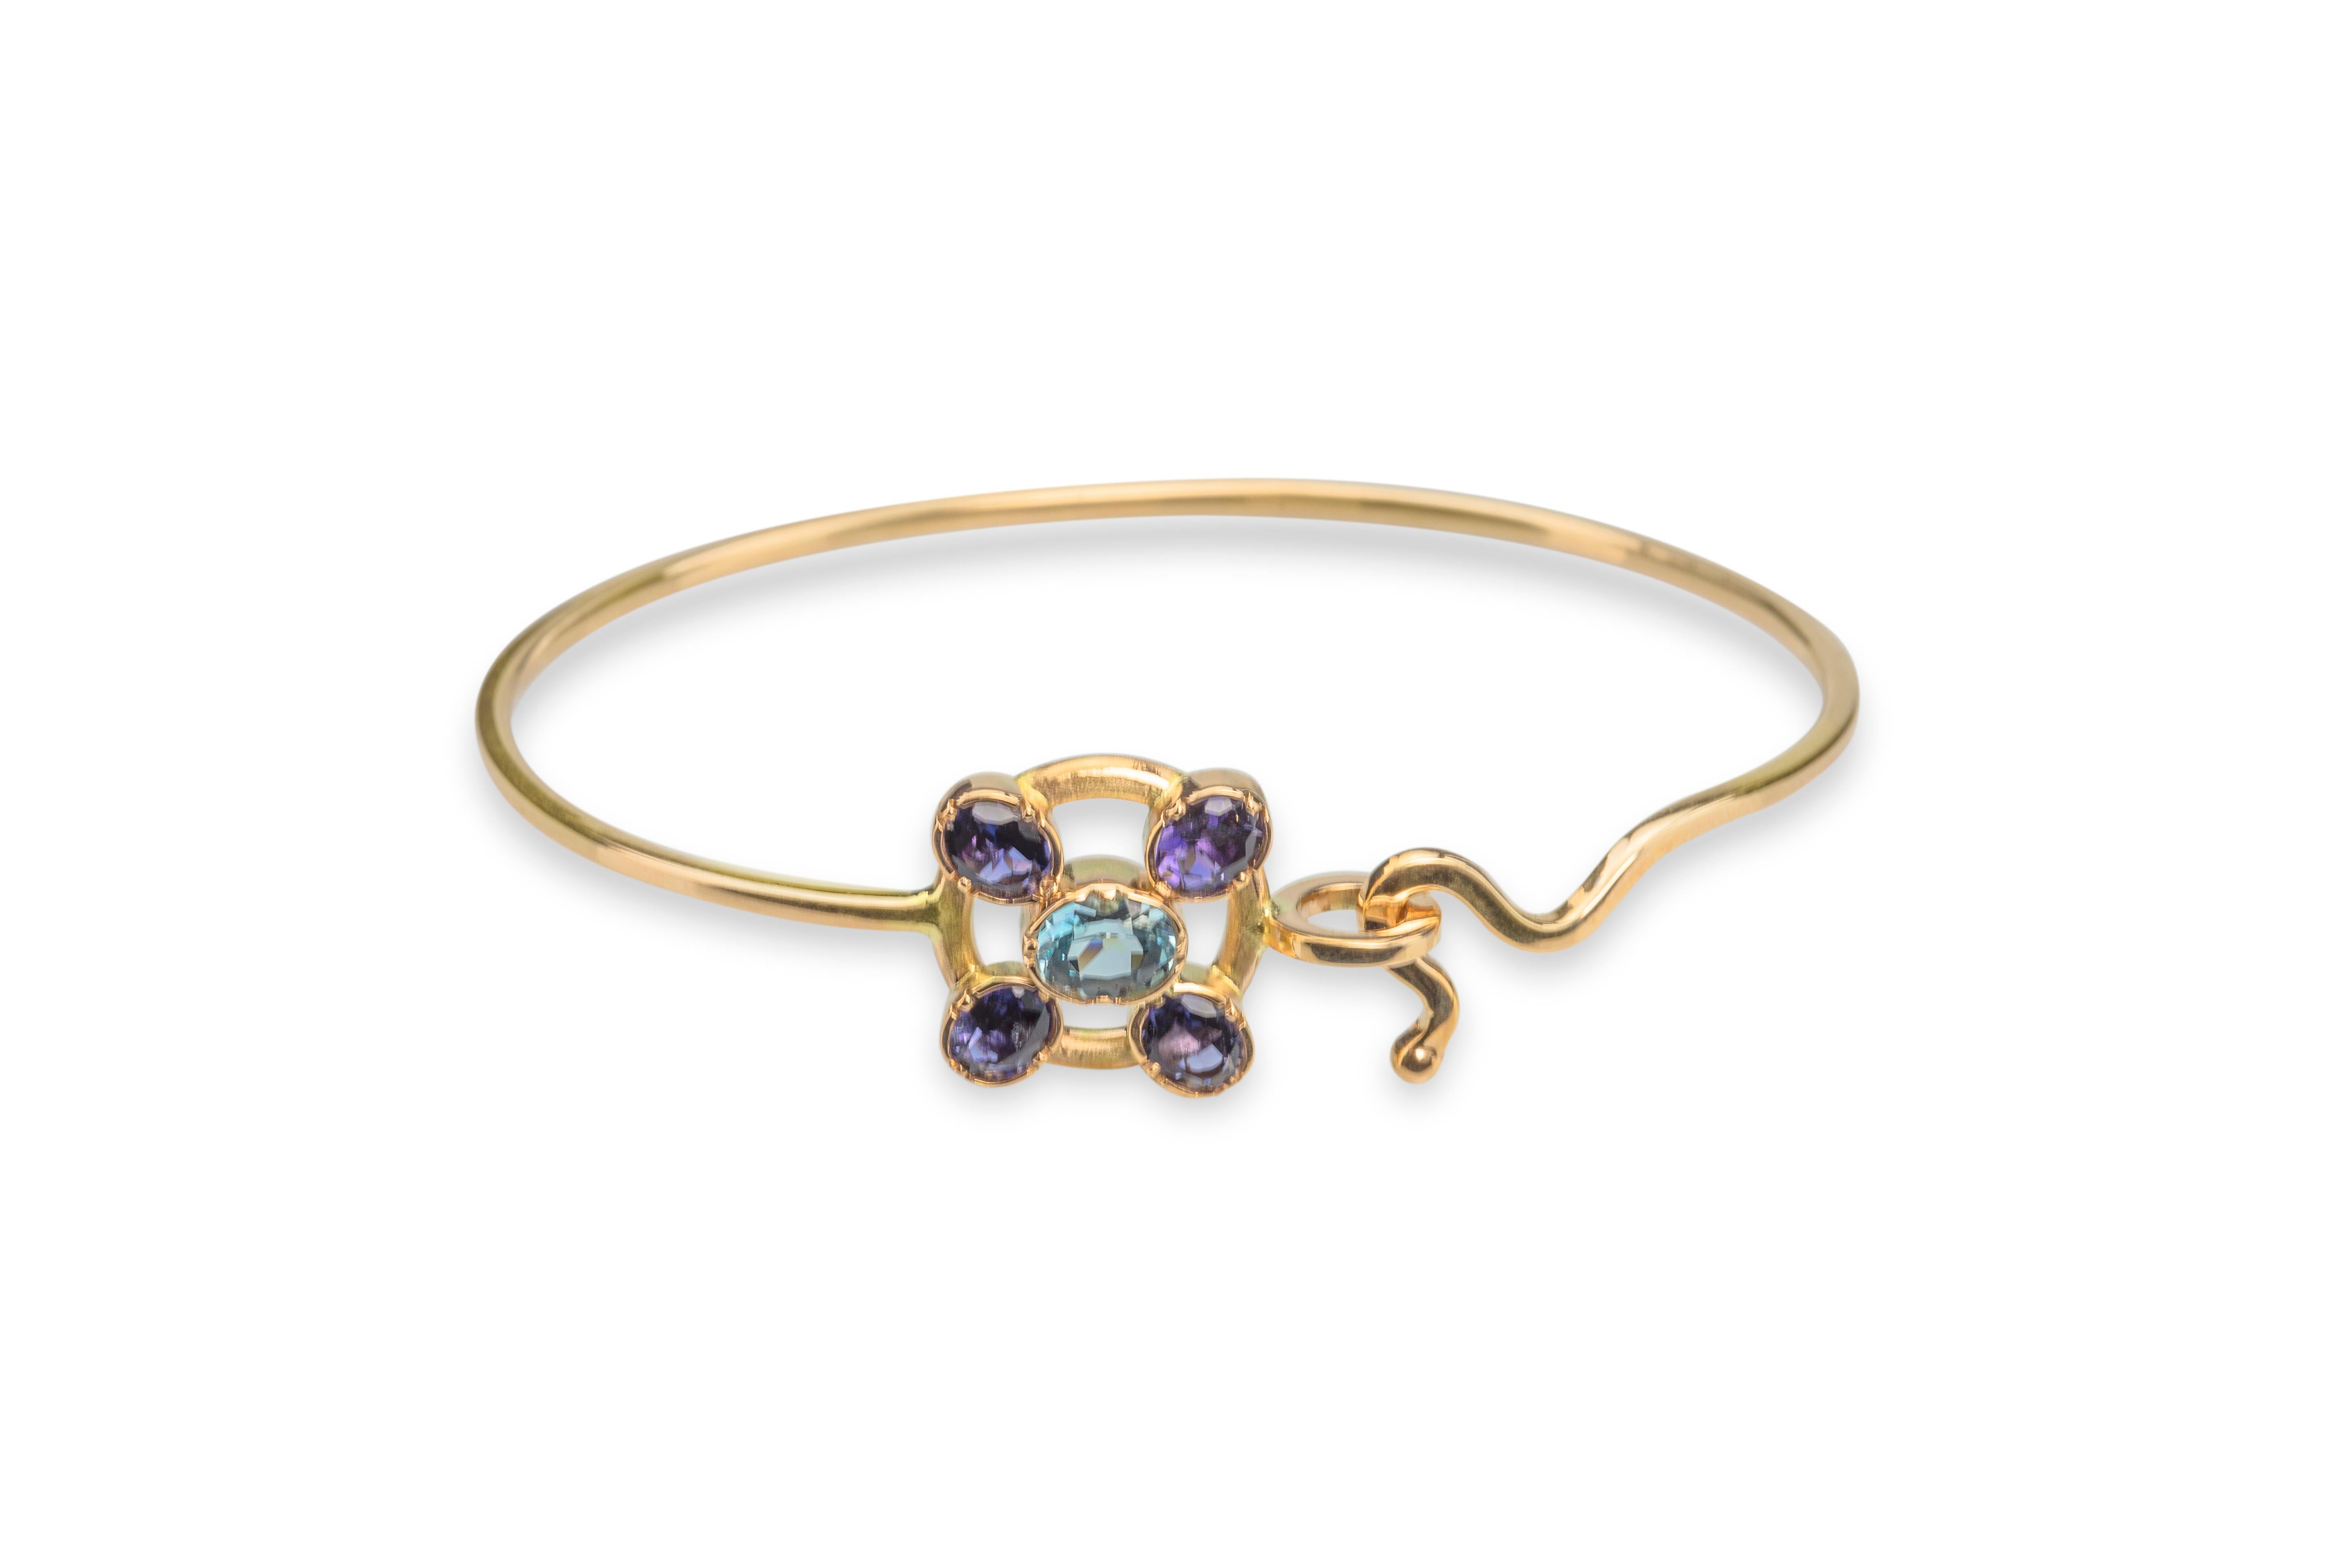 Taille ovale  Or 18K Saphirs bleus Aigue-marine Bracelet torsadé Modernity Flower Design Bracelet en vente